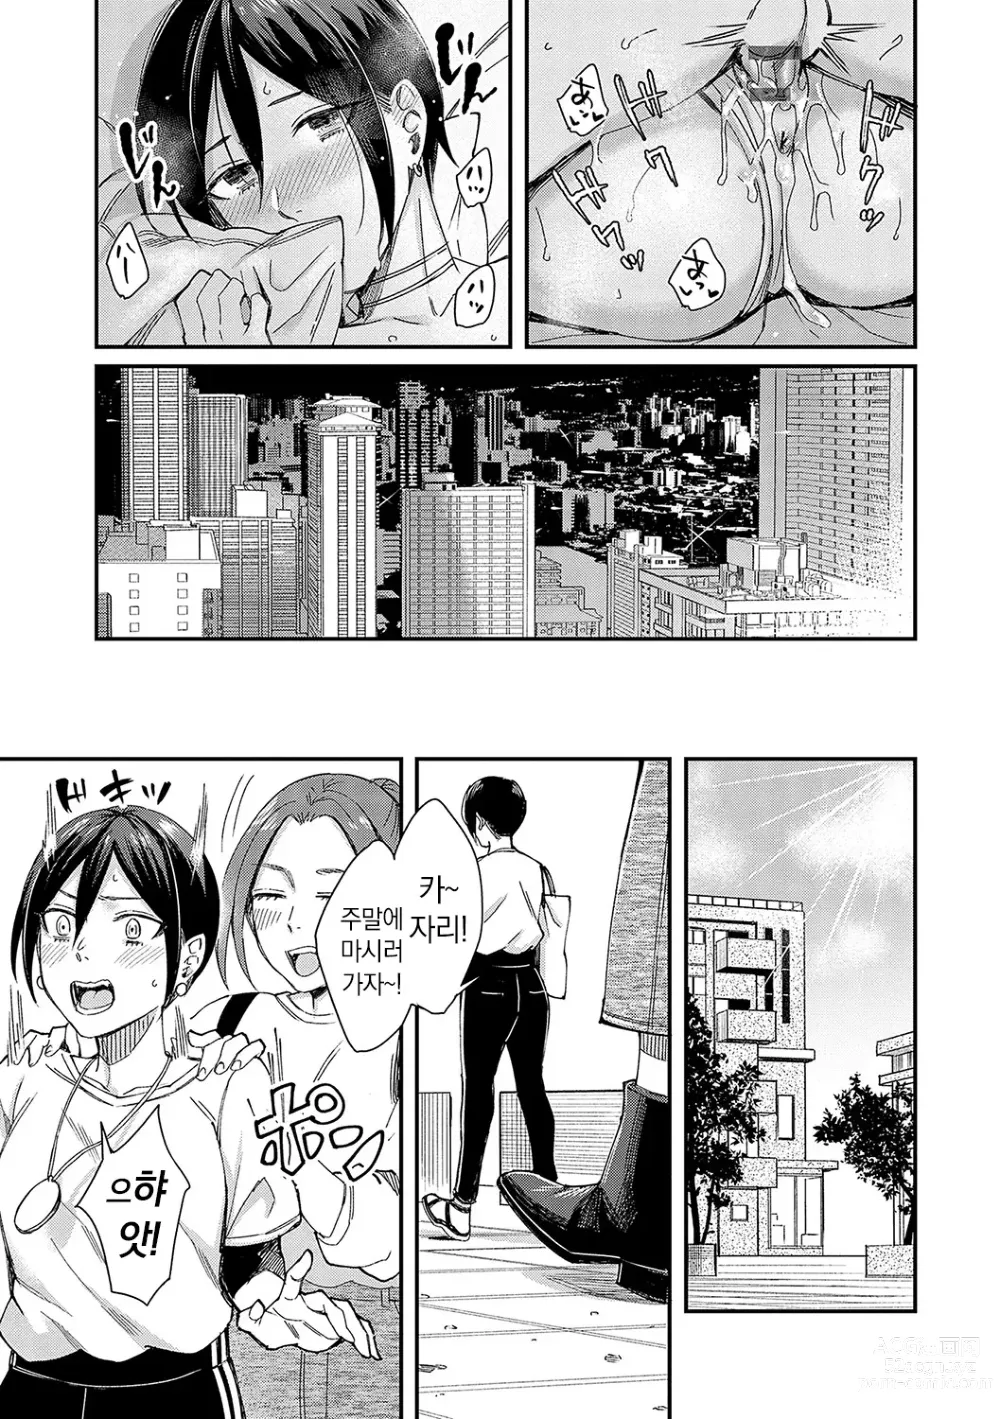 Page 220 of manga Emotional POP Girls